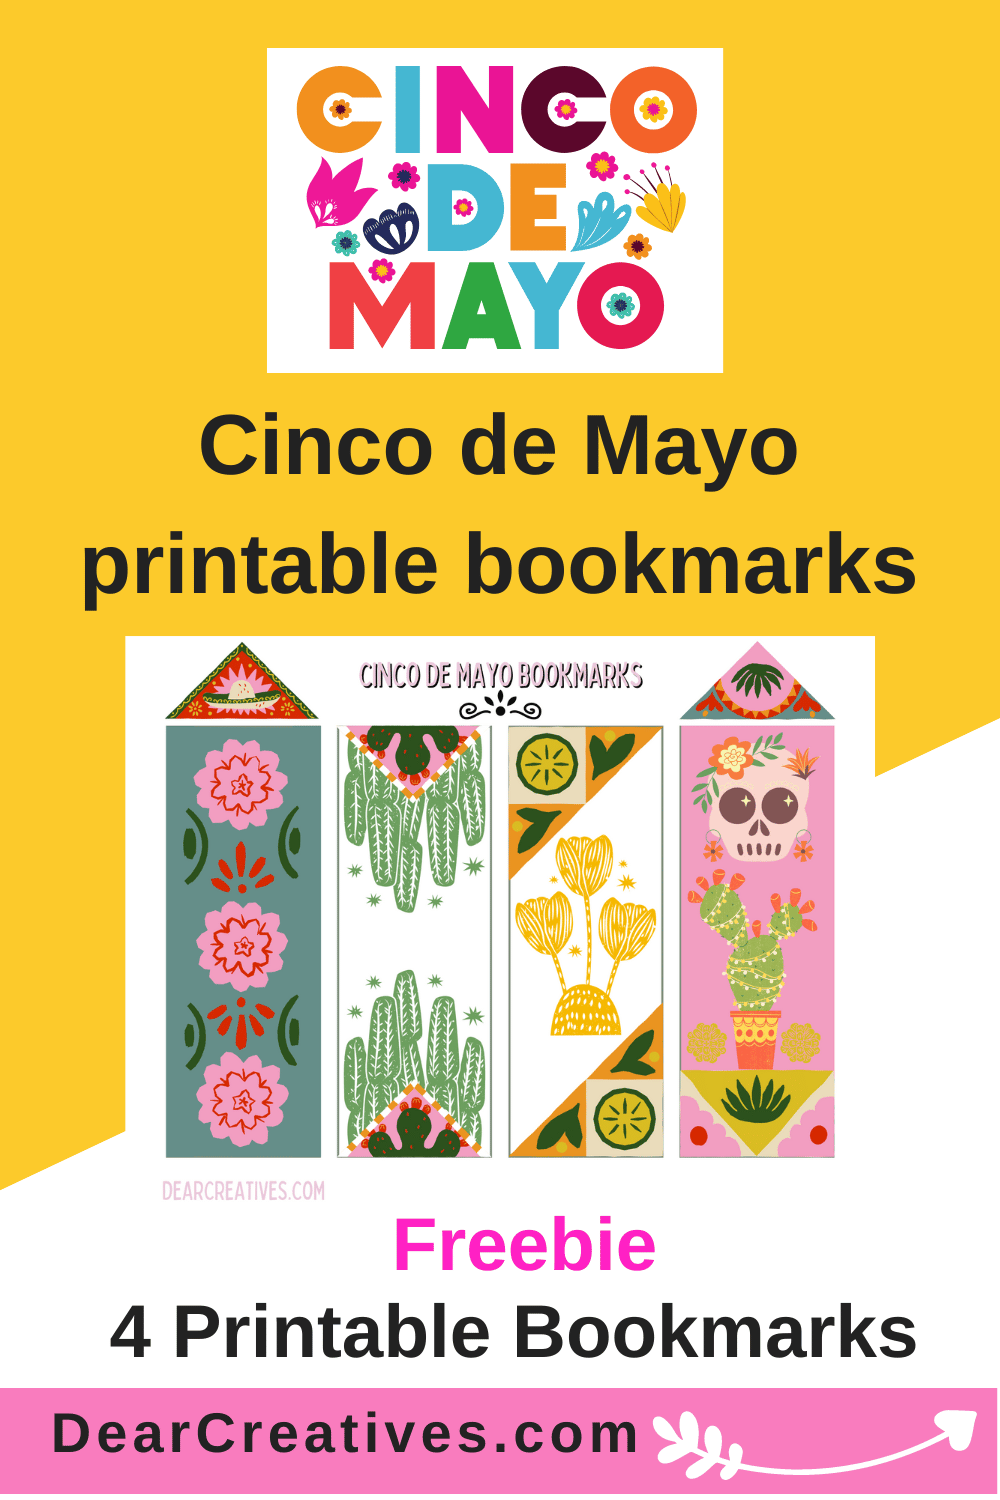 Printable Bookmarks - Cinco de Mayo printable bookmarks 4 colorful designs all on one sheet! DearCreatives.com